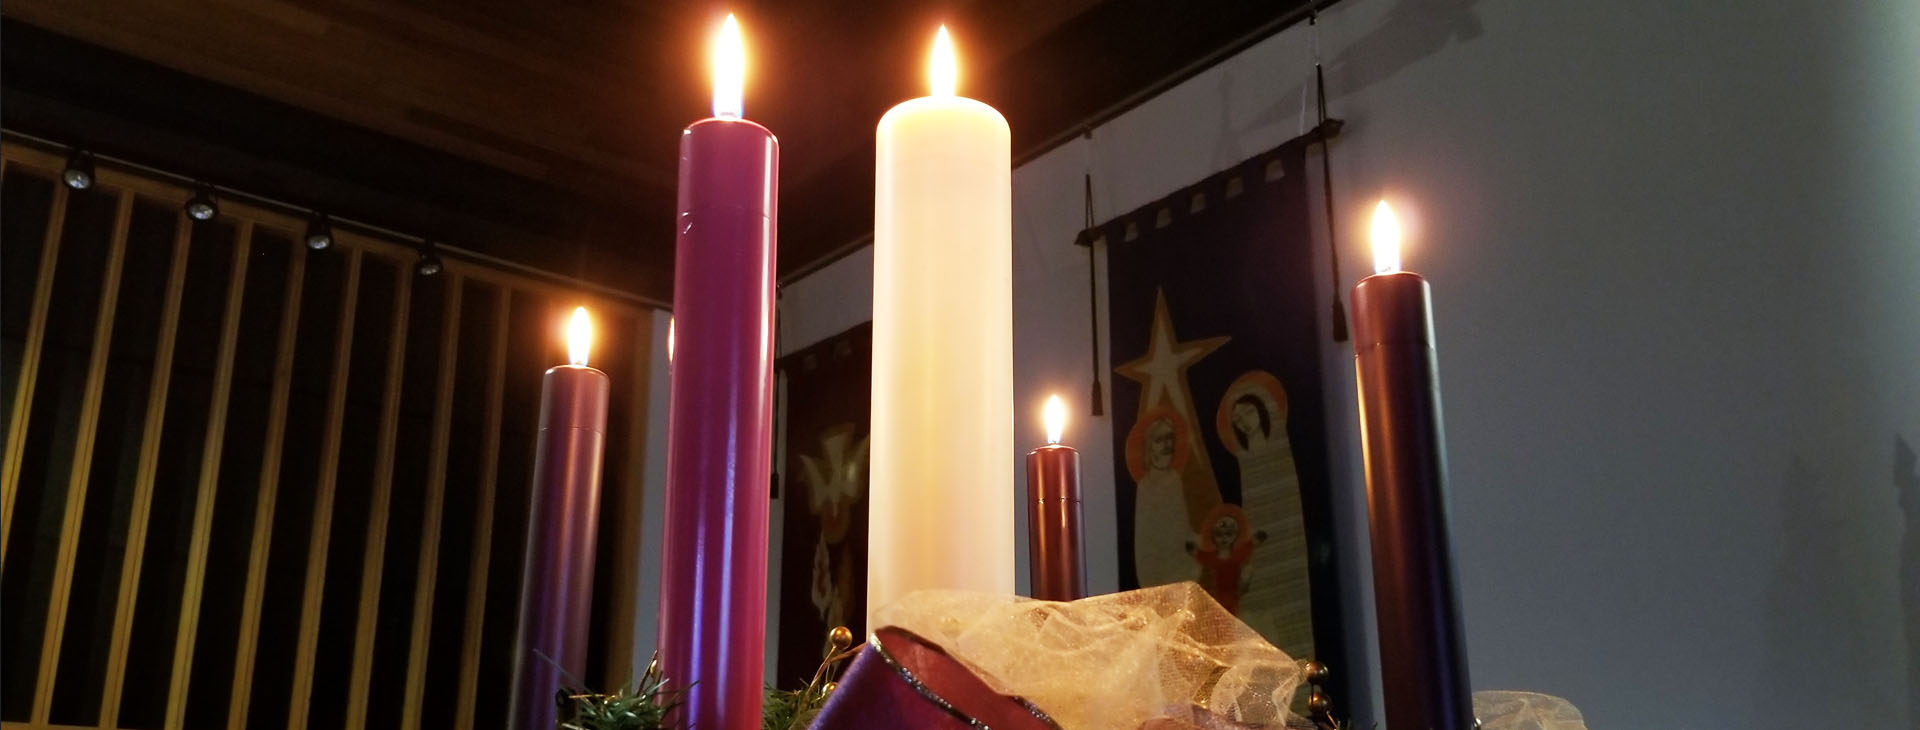 bg-advent-candles-1920x730